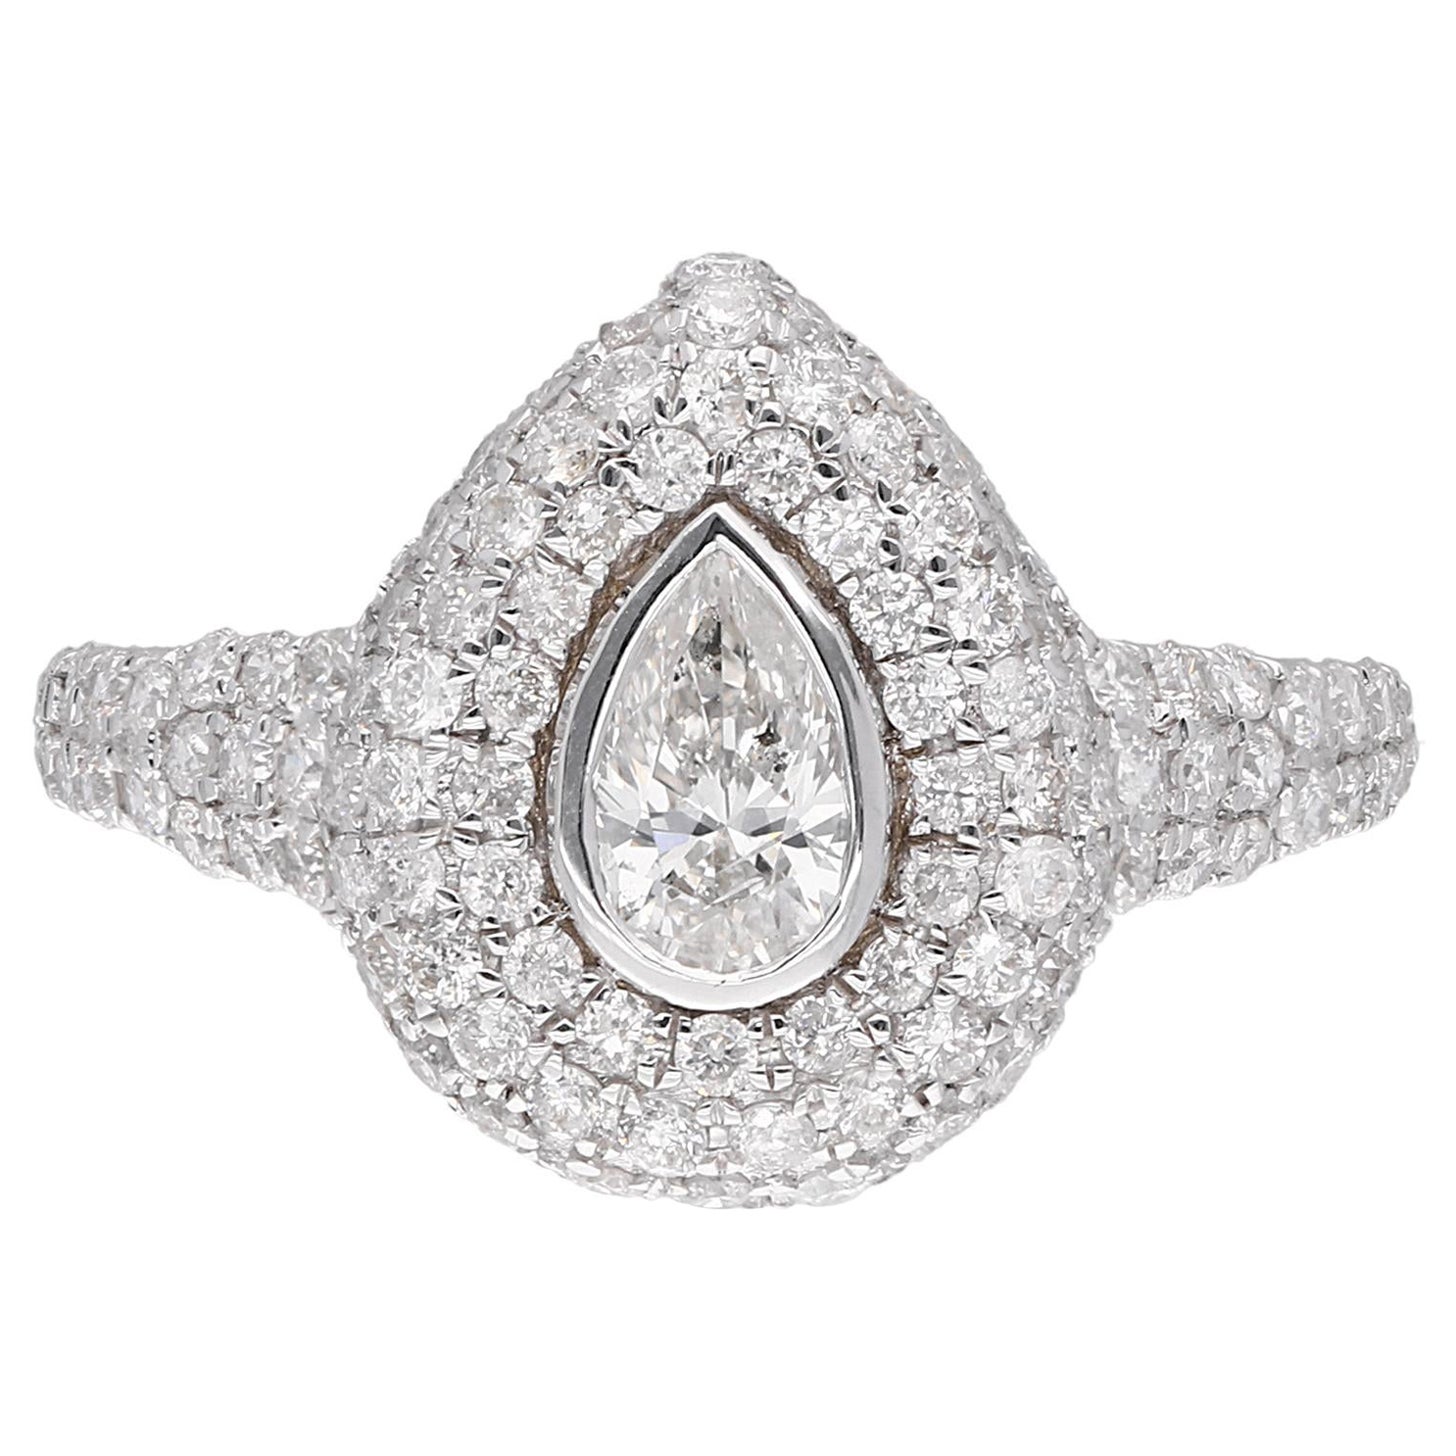 1.54 Carat Pear Diamond Studded Ring 14 Karat White Gold Handmade Fine Jewelry For Sale